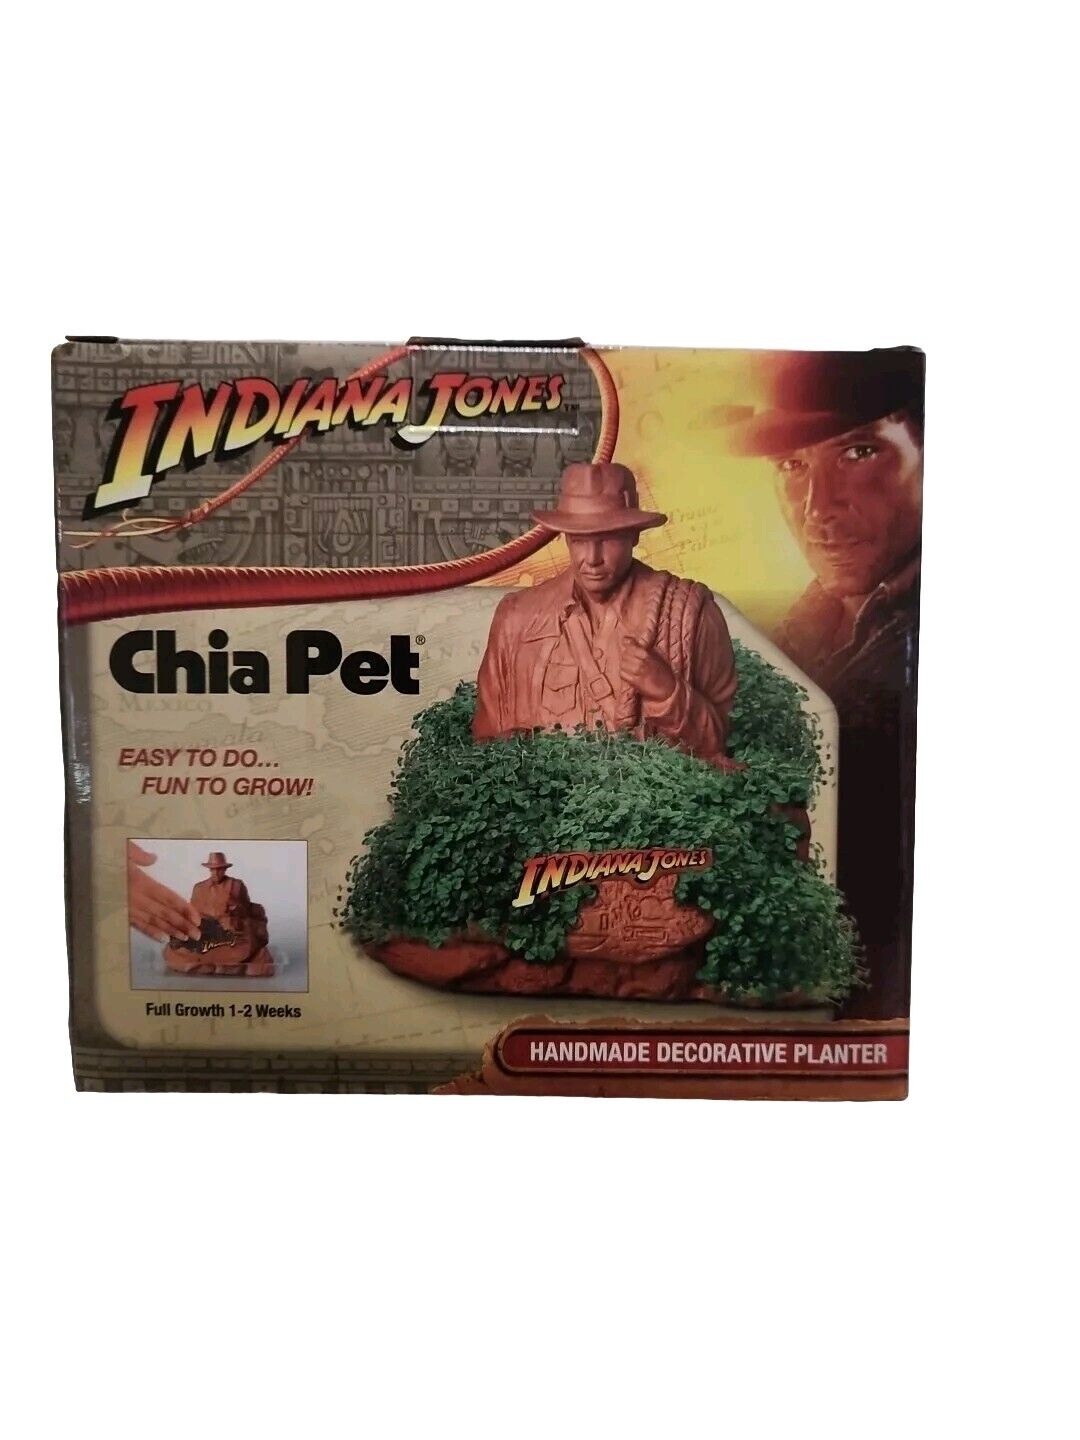 Chia Pet Indiana Jones Handmade Decorative Planter Pop Culture Novelty Gift  NIB